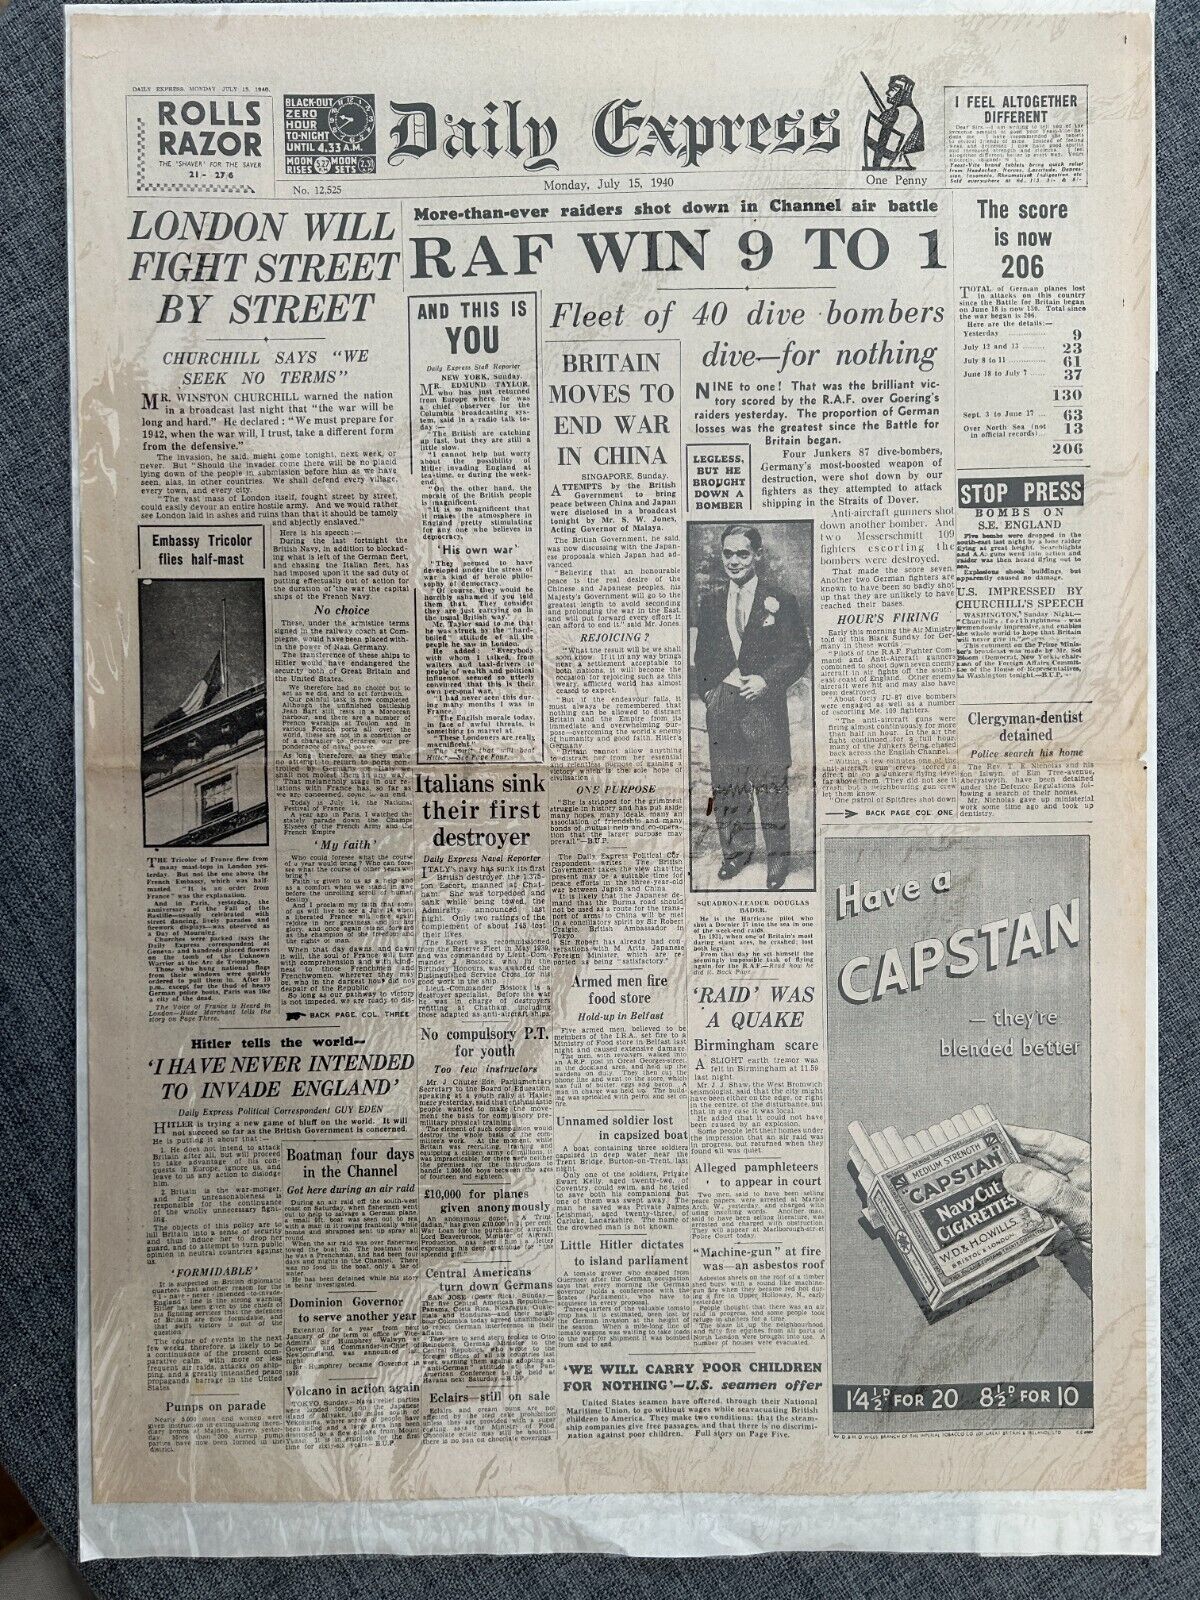 WW2 BATTLE BRITAIN RAF DOUGLAS BADER DAILY EXPRESS 1940 VINTAGE NEWSPAPER